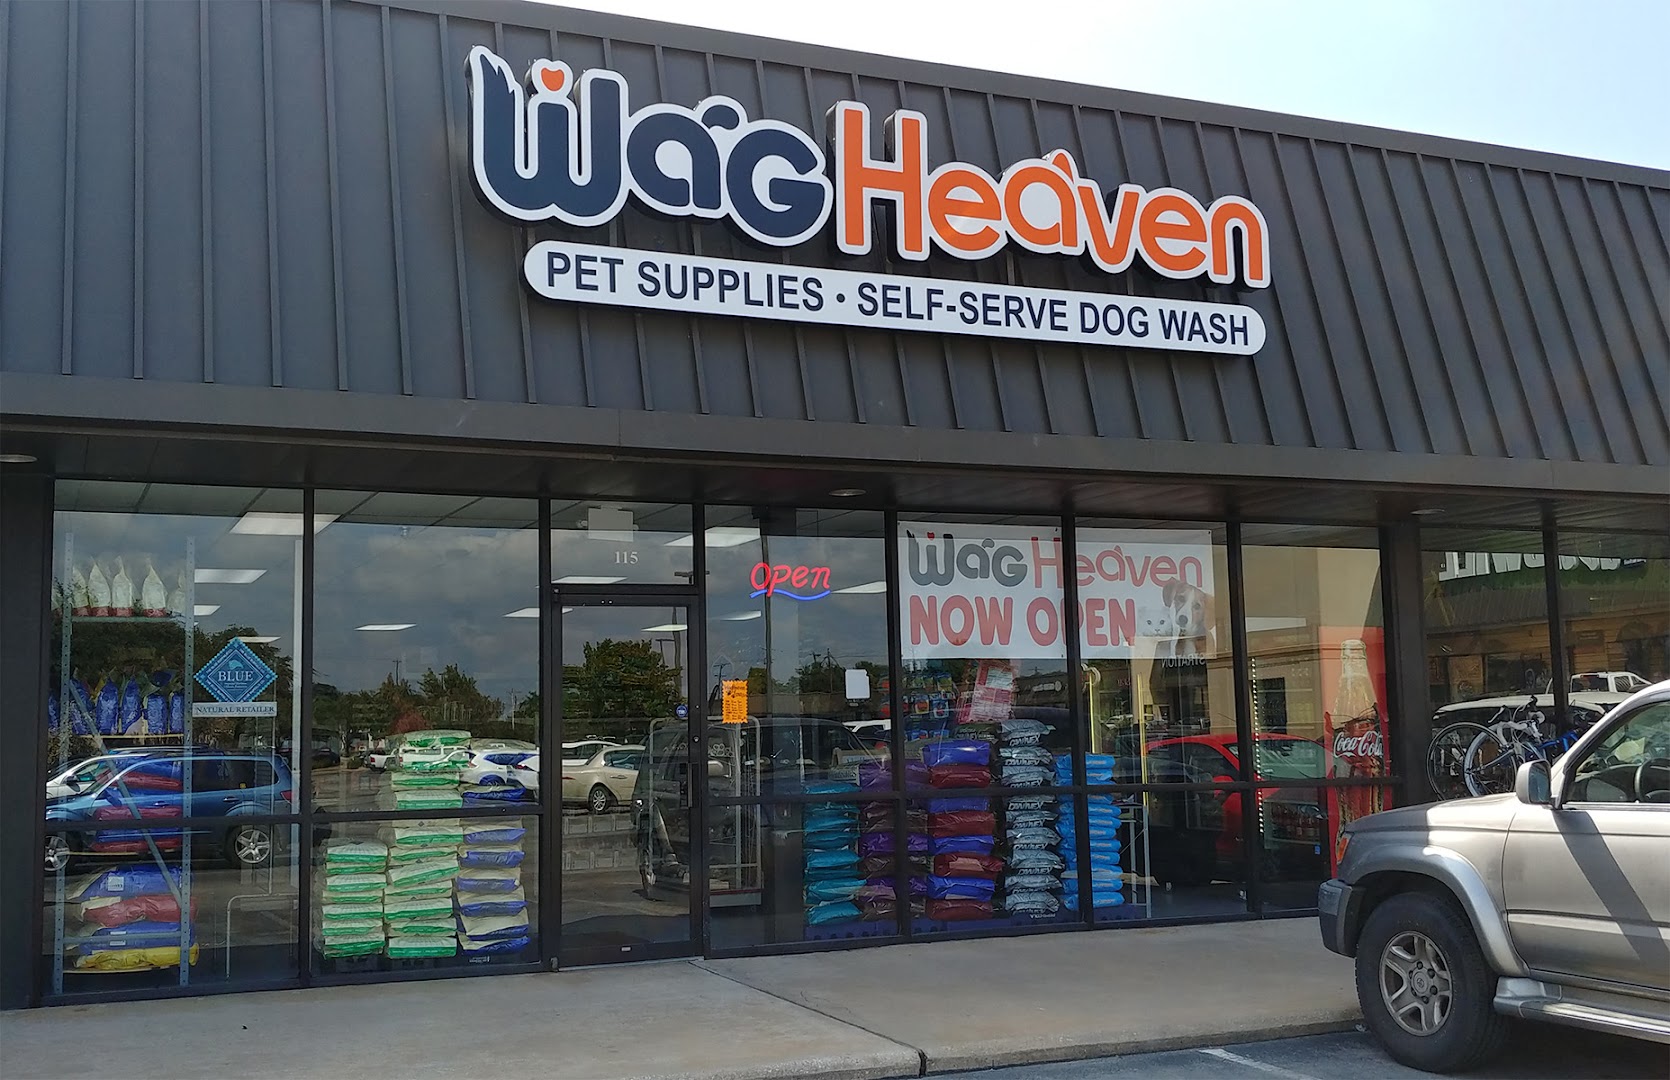 Wag Heaven Pet Supplies & Self-Serve Dog Wash